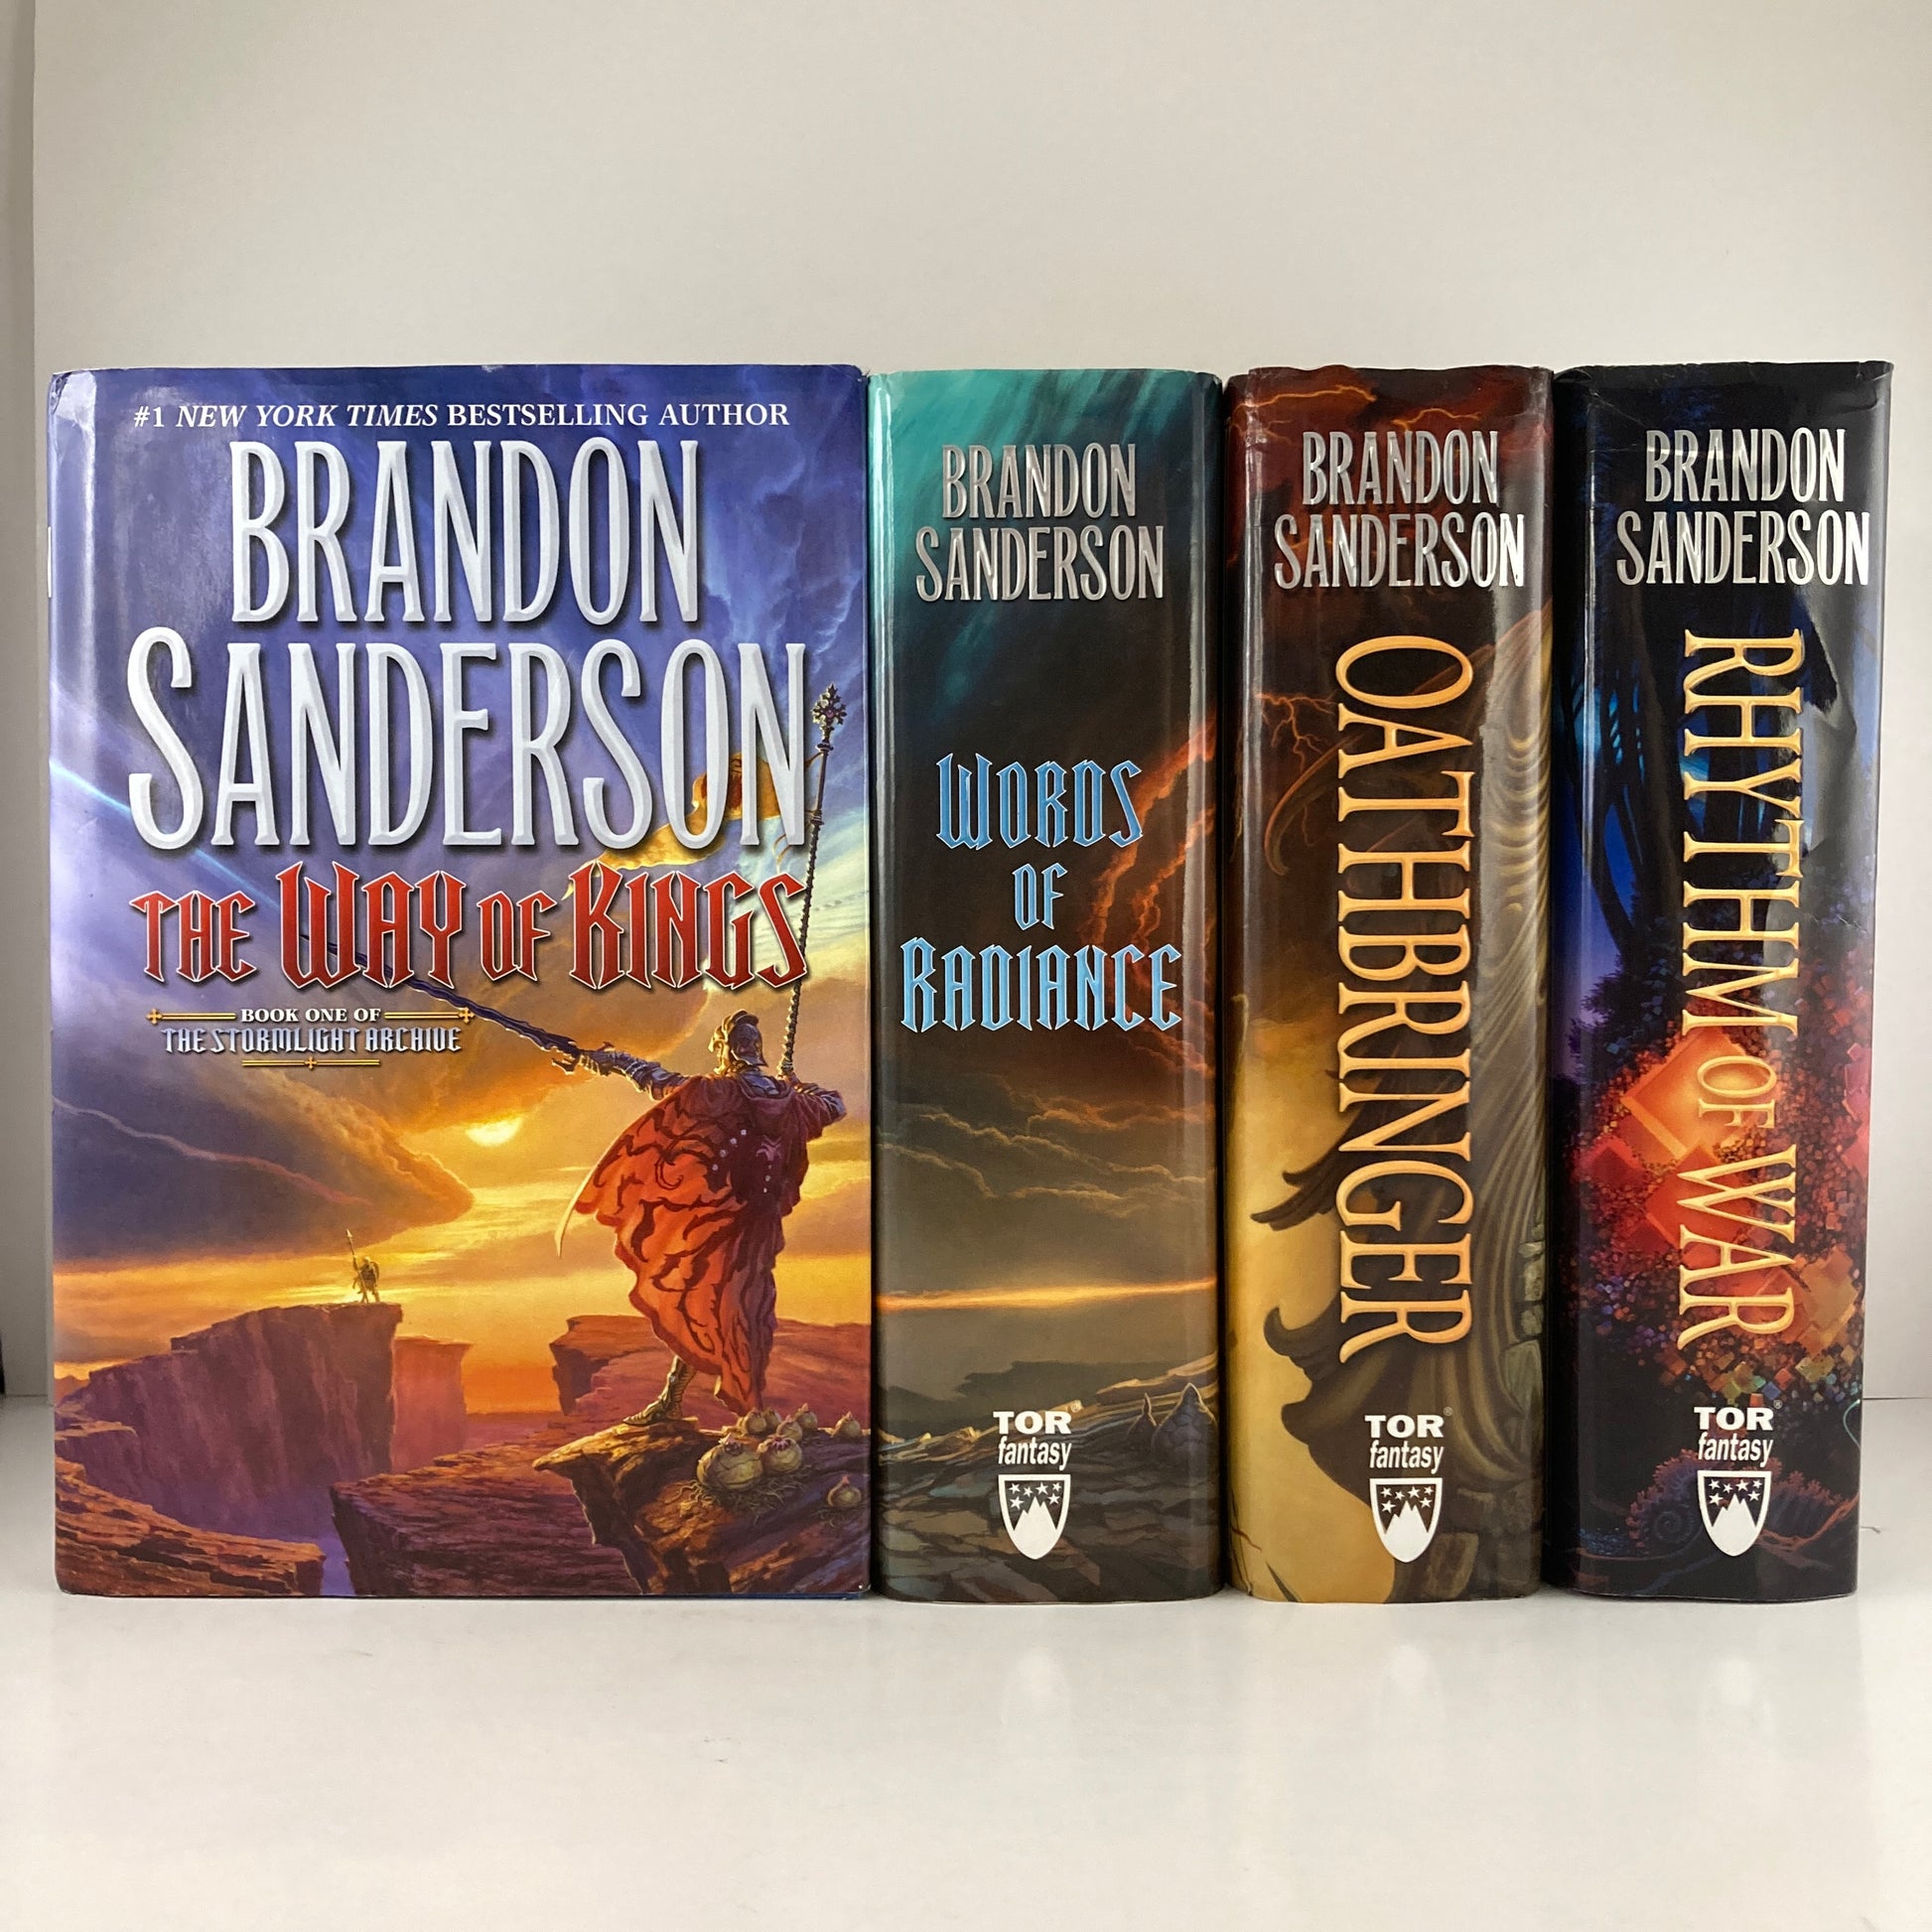  Brandon Sanderson: books, biography, latest update